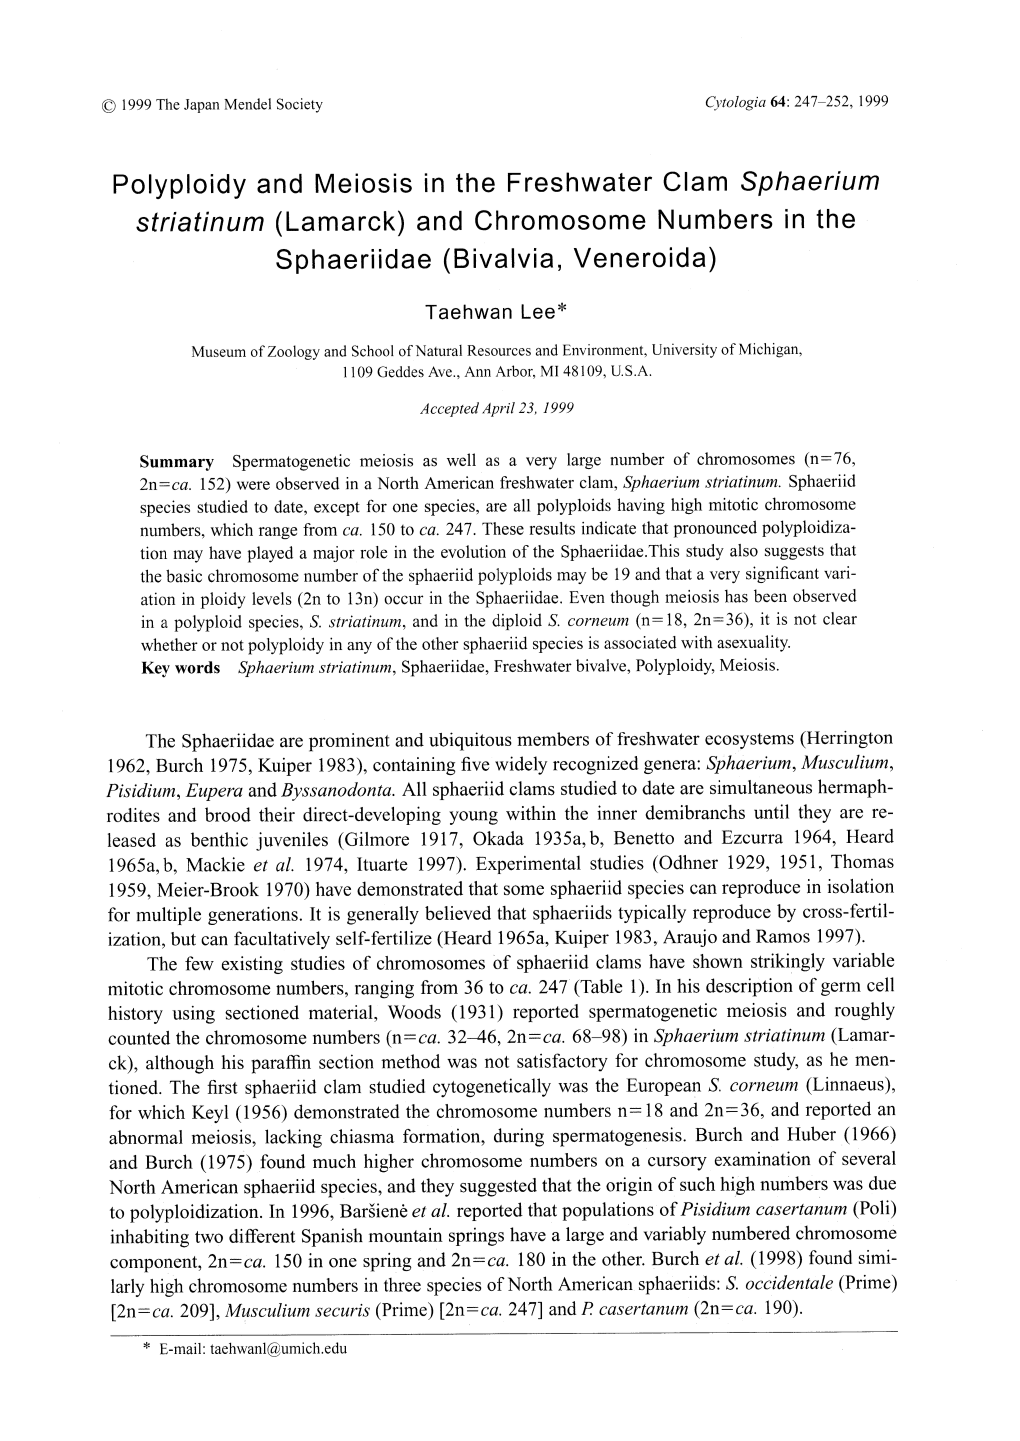 Polyploidy and Meiosis in the Freshwater Clam Sphaerium Striatinum (Lamarck) and Chromosome Numbers in the Sphaeriidae (Bivalvia, Veneroida)